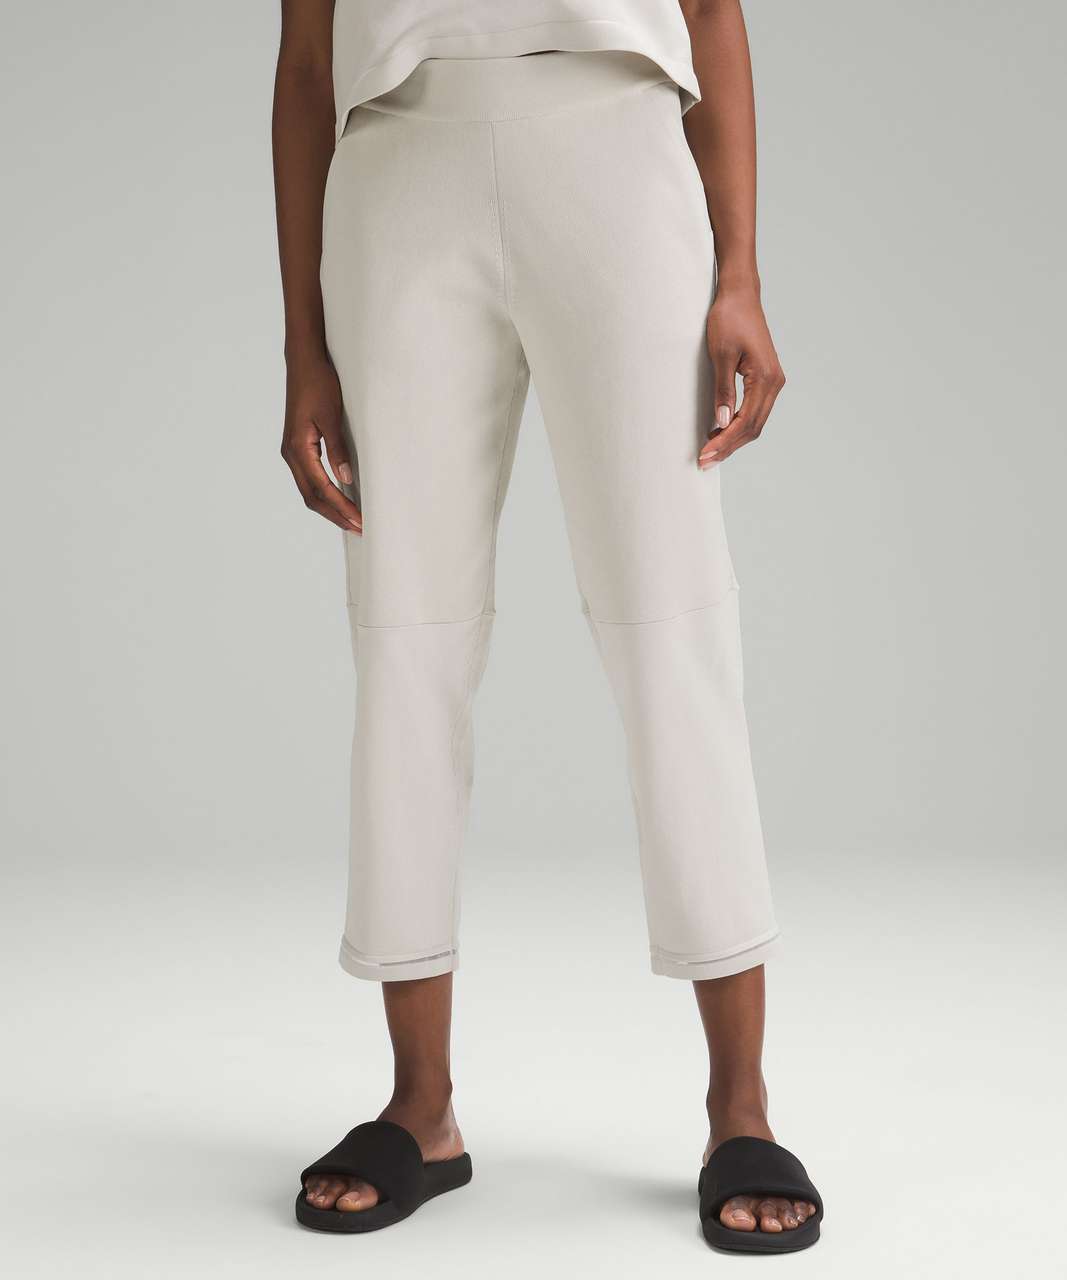 Njoeus Womens Casual Capris Pants, Women's Cotton High Waist Tie Belted Cropped  Trousers Linen Beach Capris Shorts Pockets for Women S-5XL (Available in  Plus Size) - Walmart.com